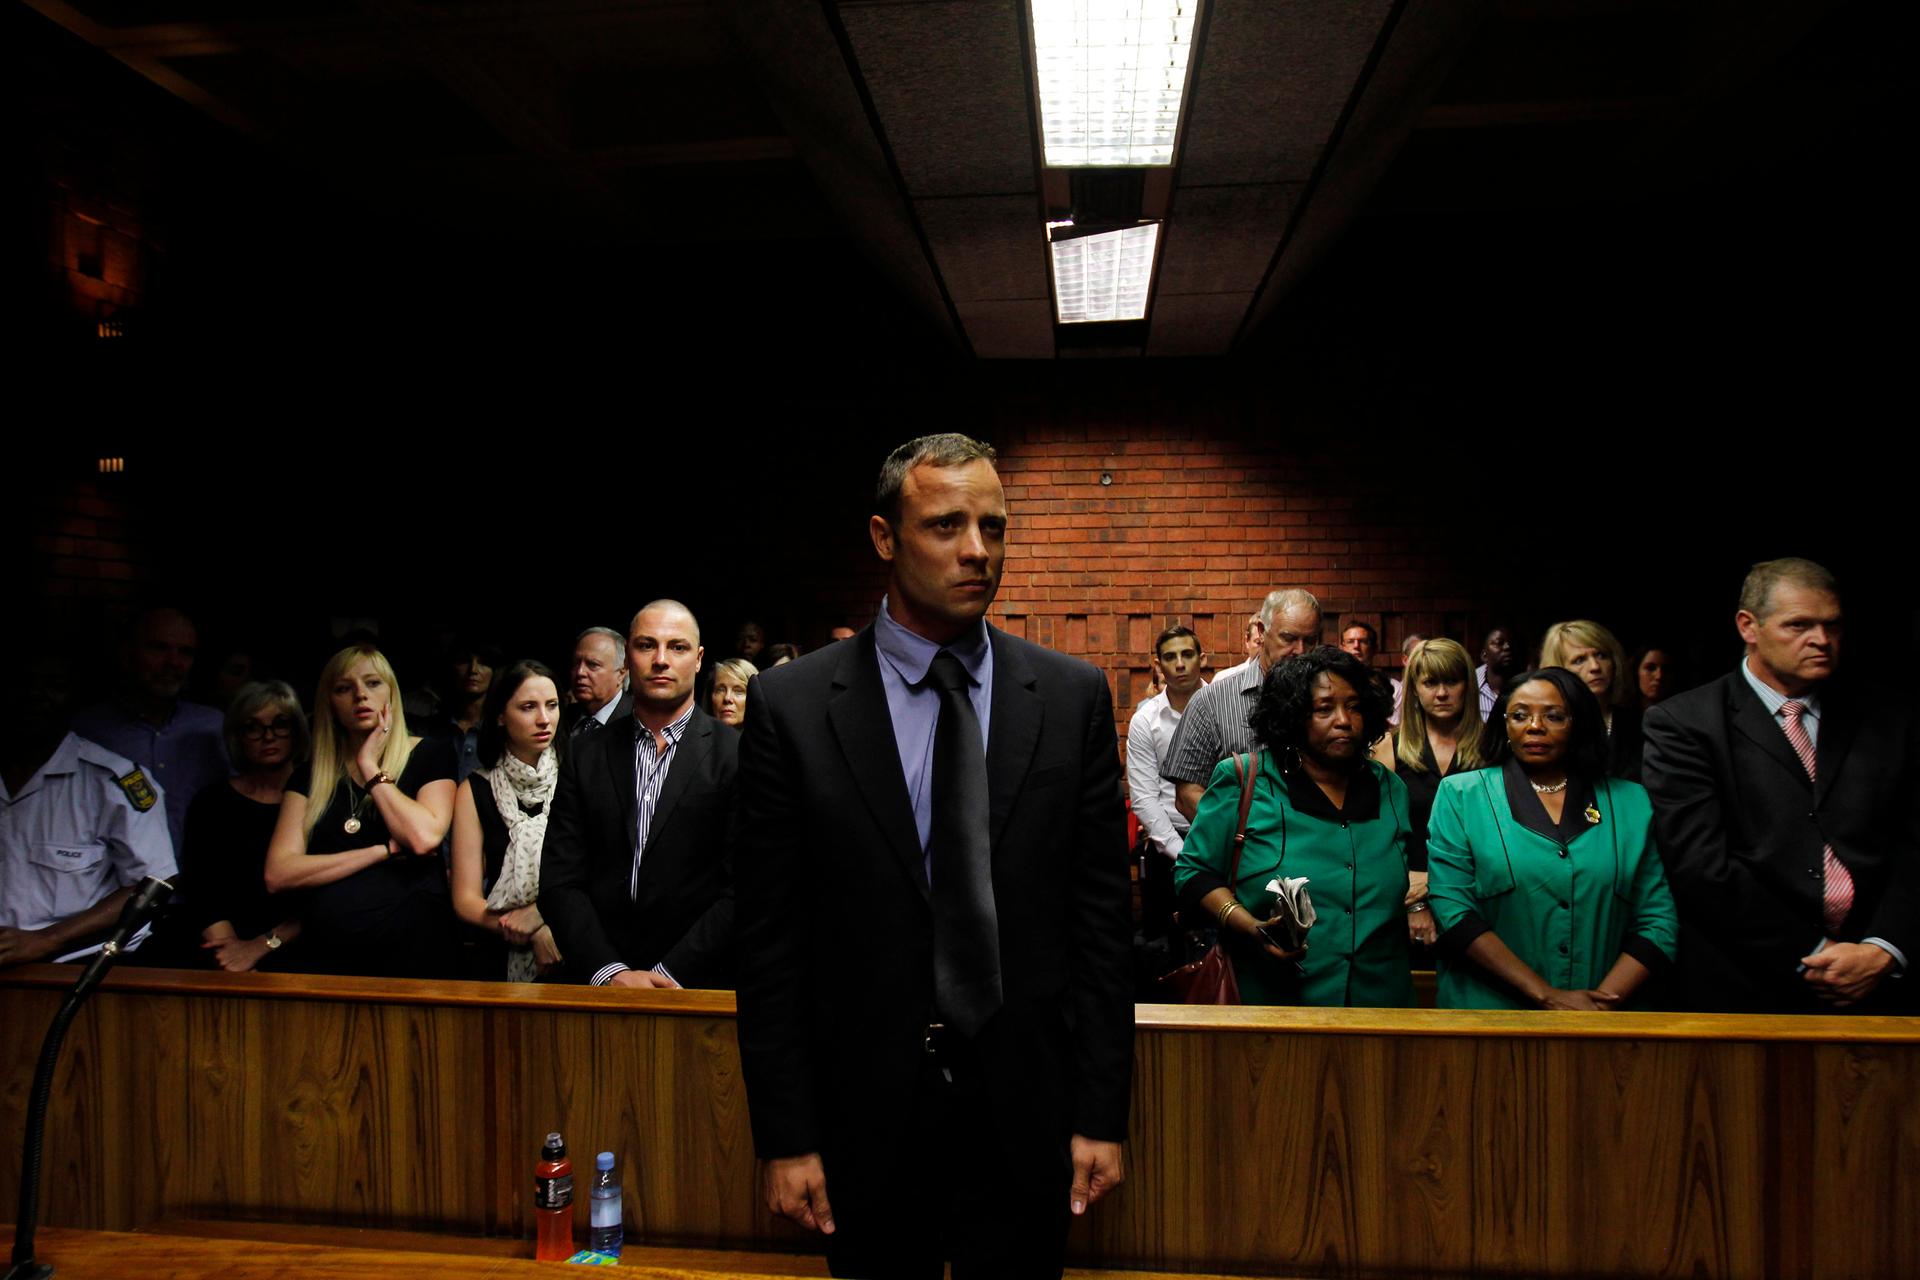 Oscar Pistorius awaits the start of court proceedings